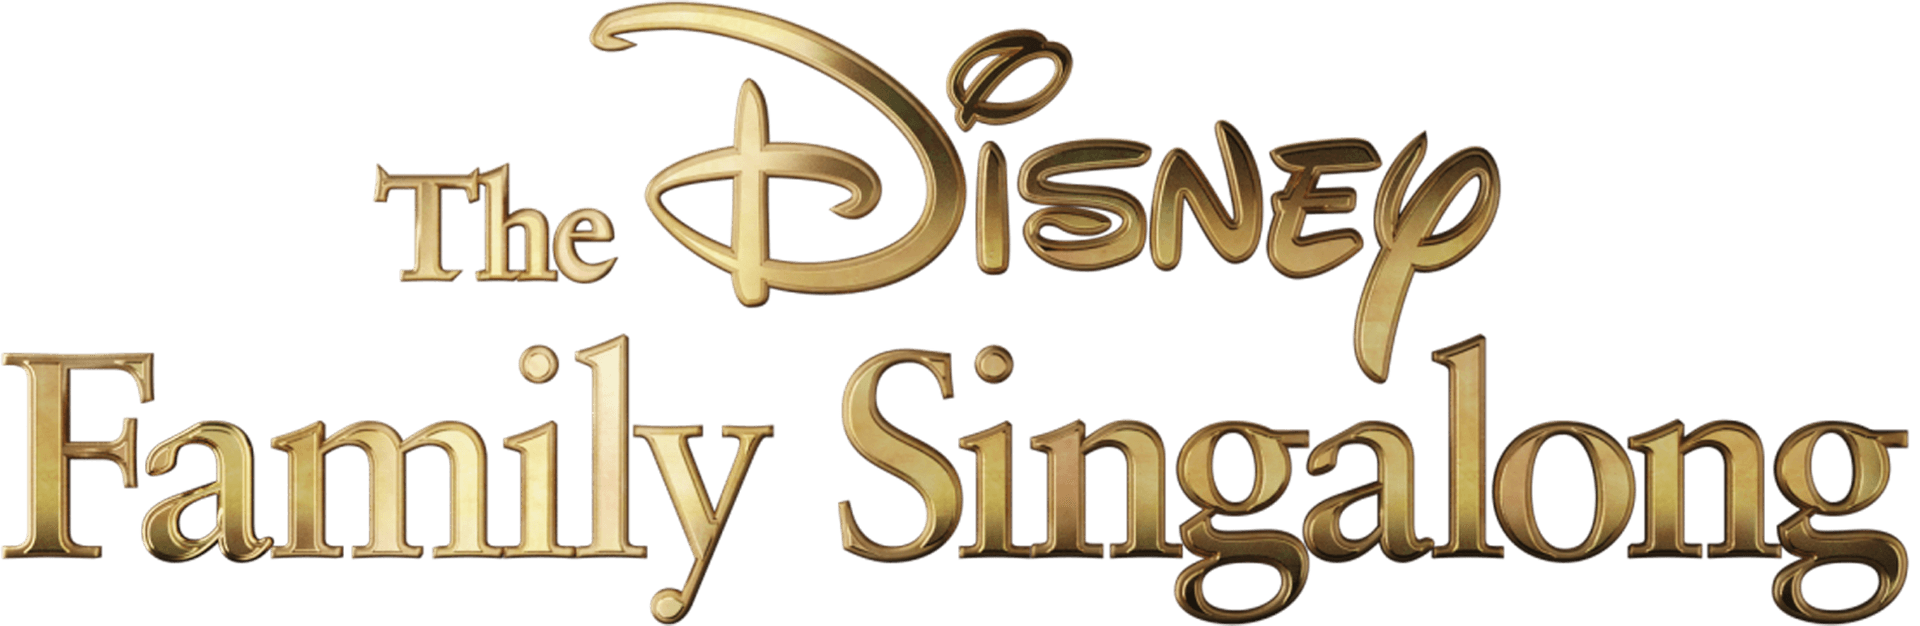 The Disney Family Singalong logo